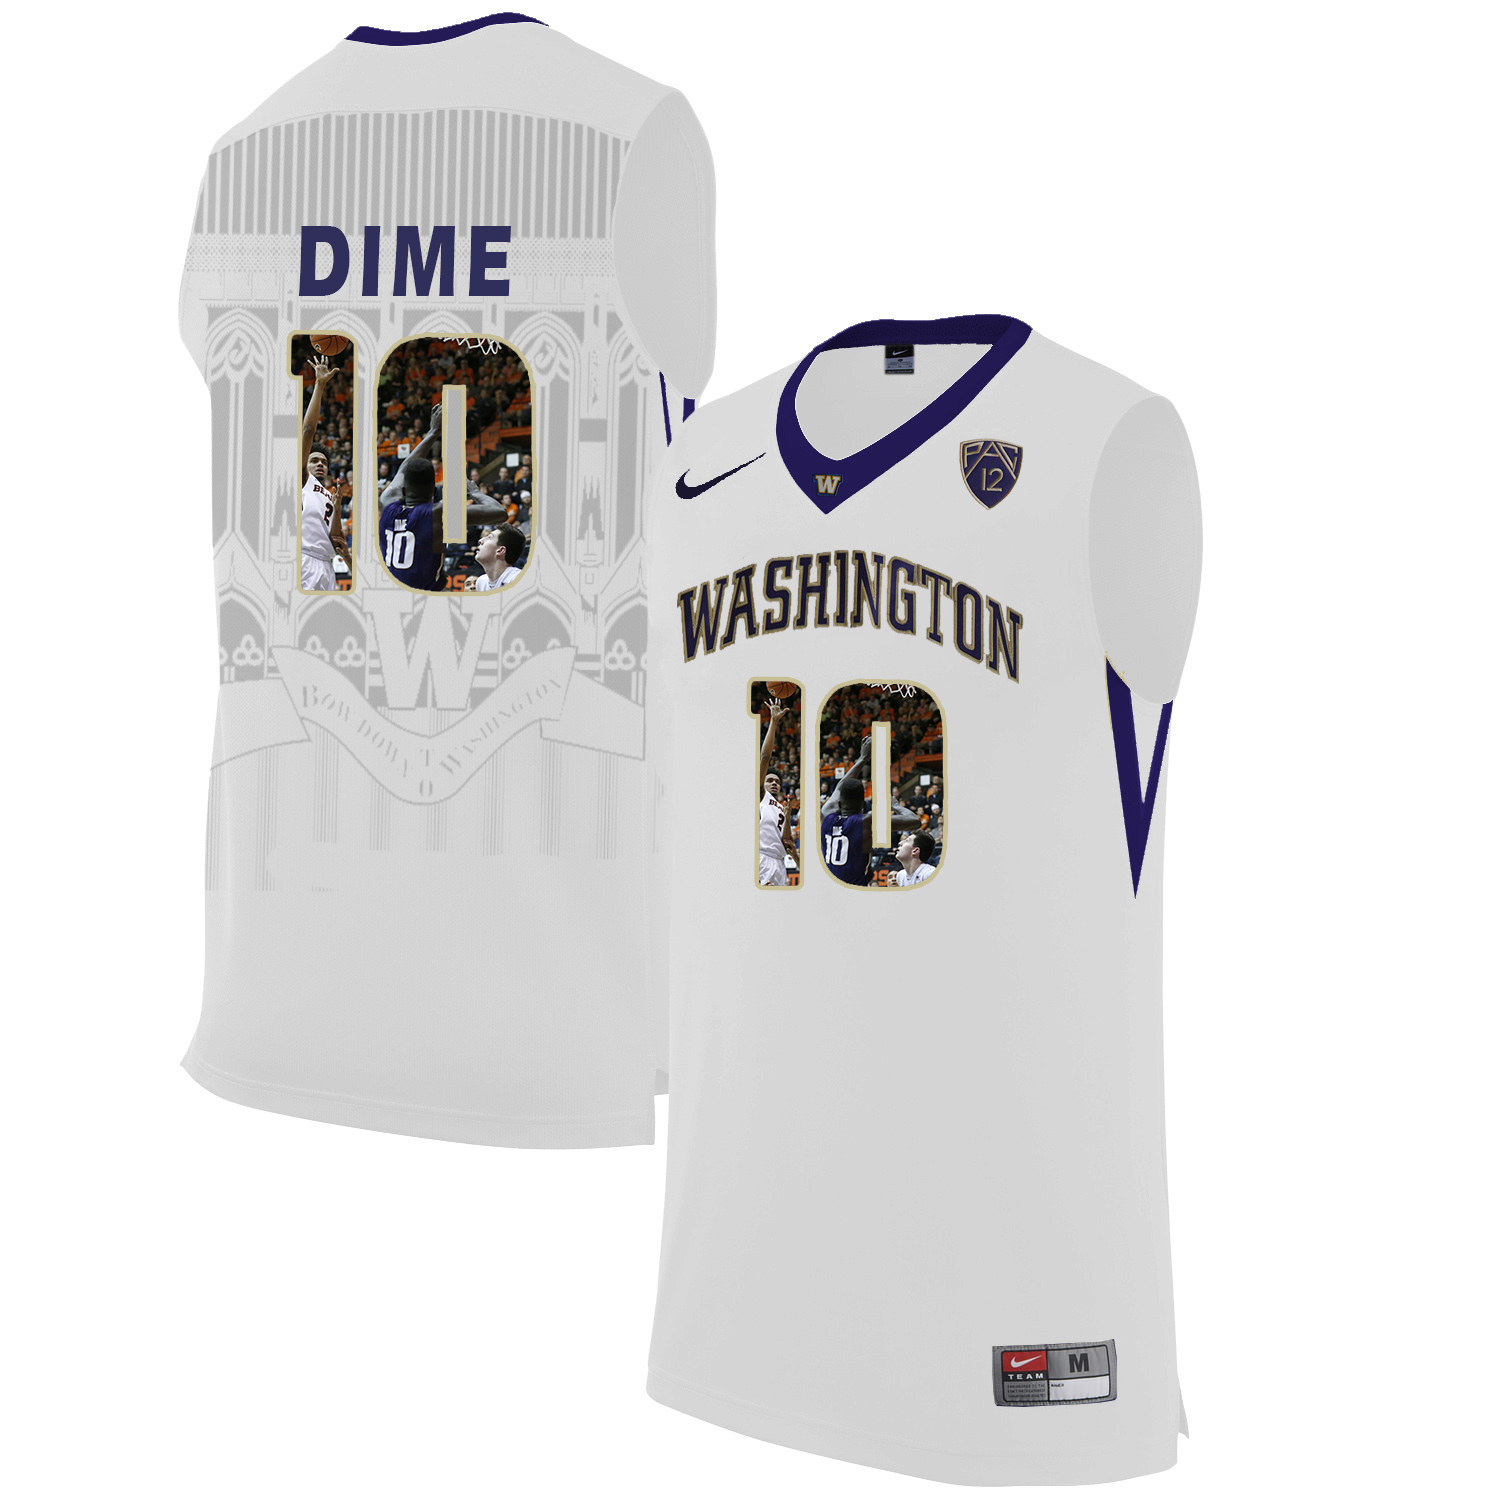 Washington Huskies 10 DIME White With Portait College Basketball Jersey